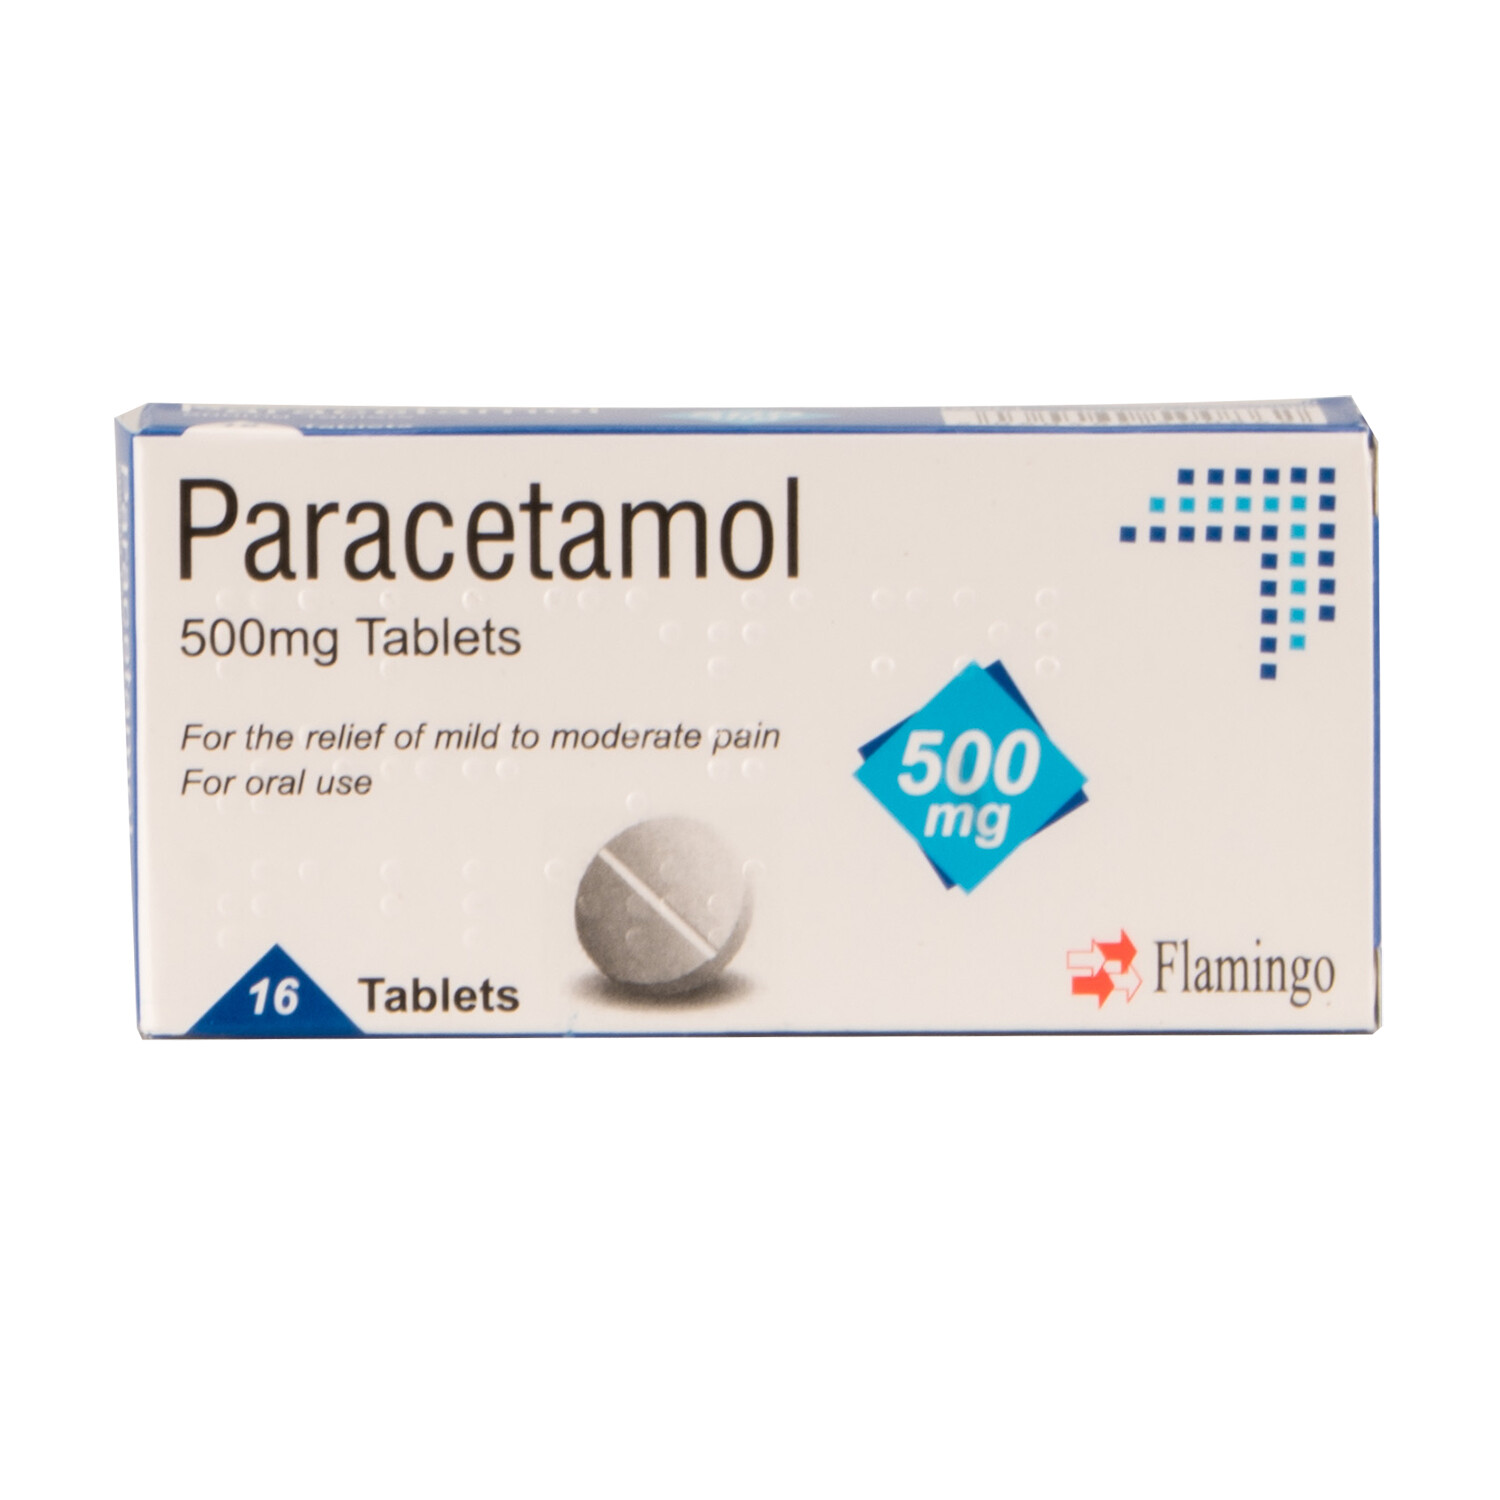 Pack of 16 Paracetamol 500mg Tablets Image